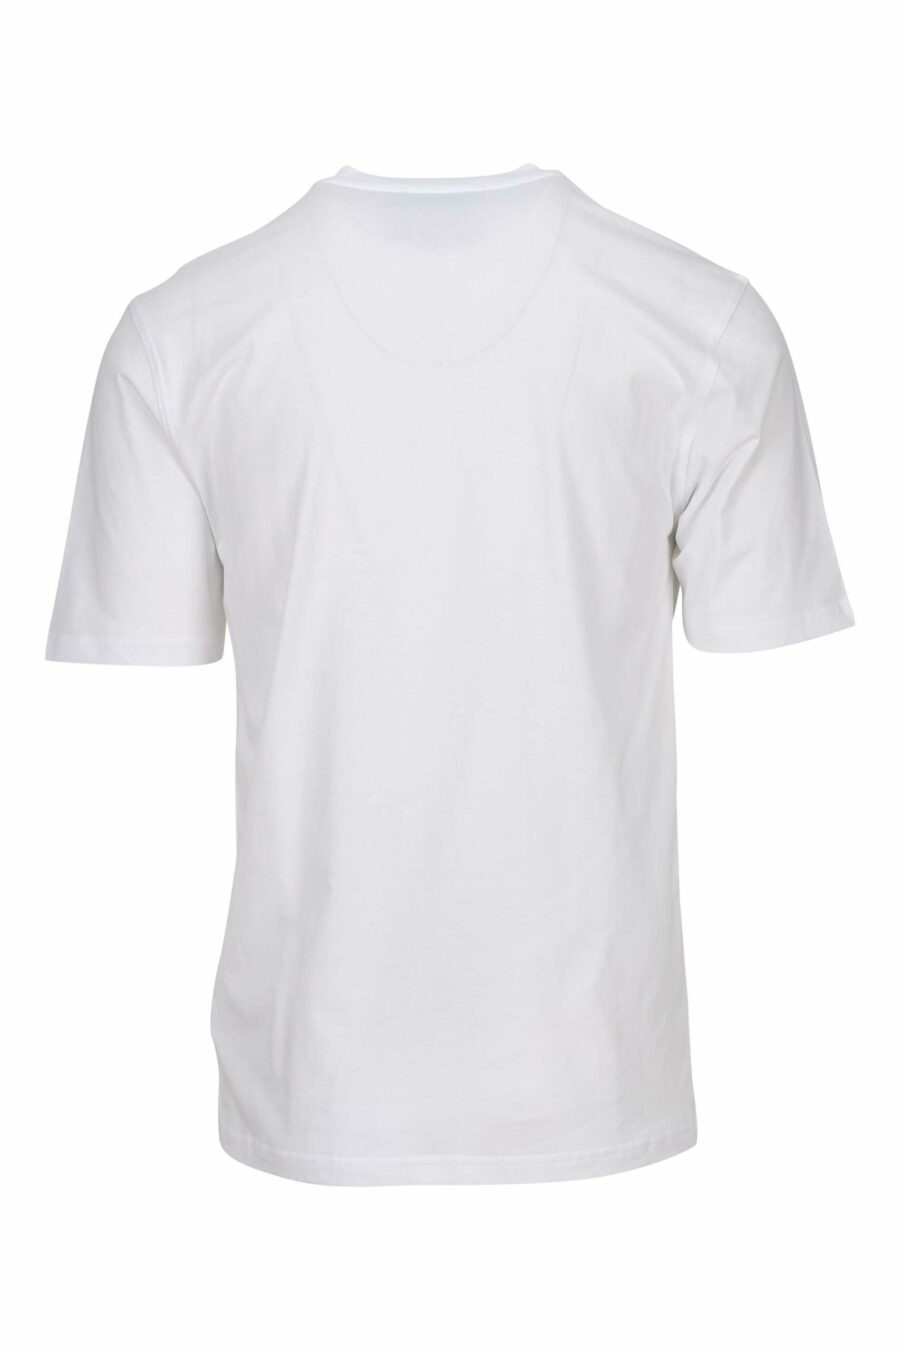 T-shirt blanc oversize avec logo "in love we trust" - 667113764801 1 scaled